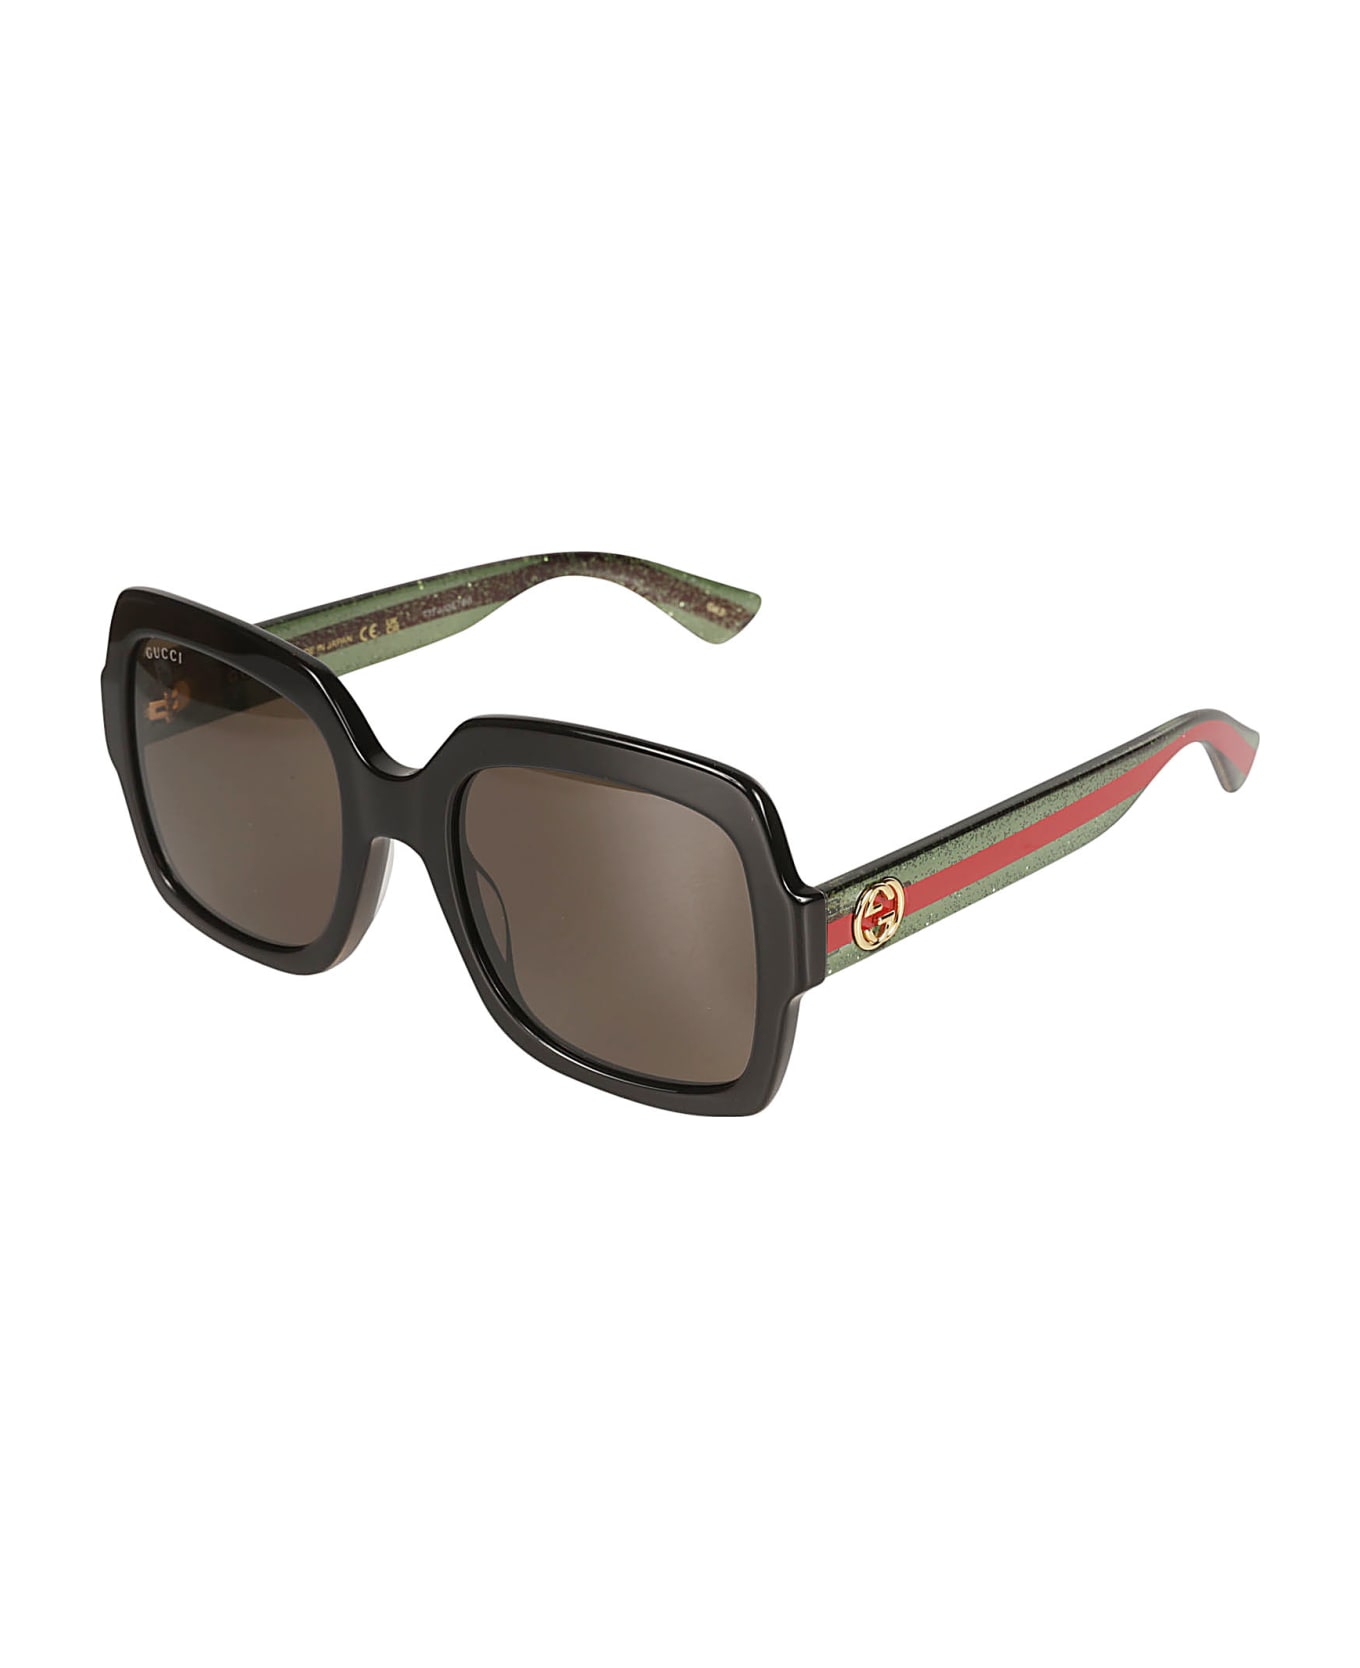 Gucci Eyewear Large Square nike Sunglasses - Black/Green